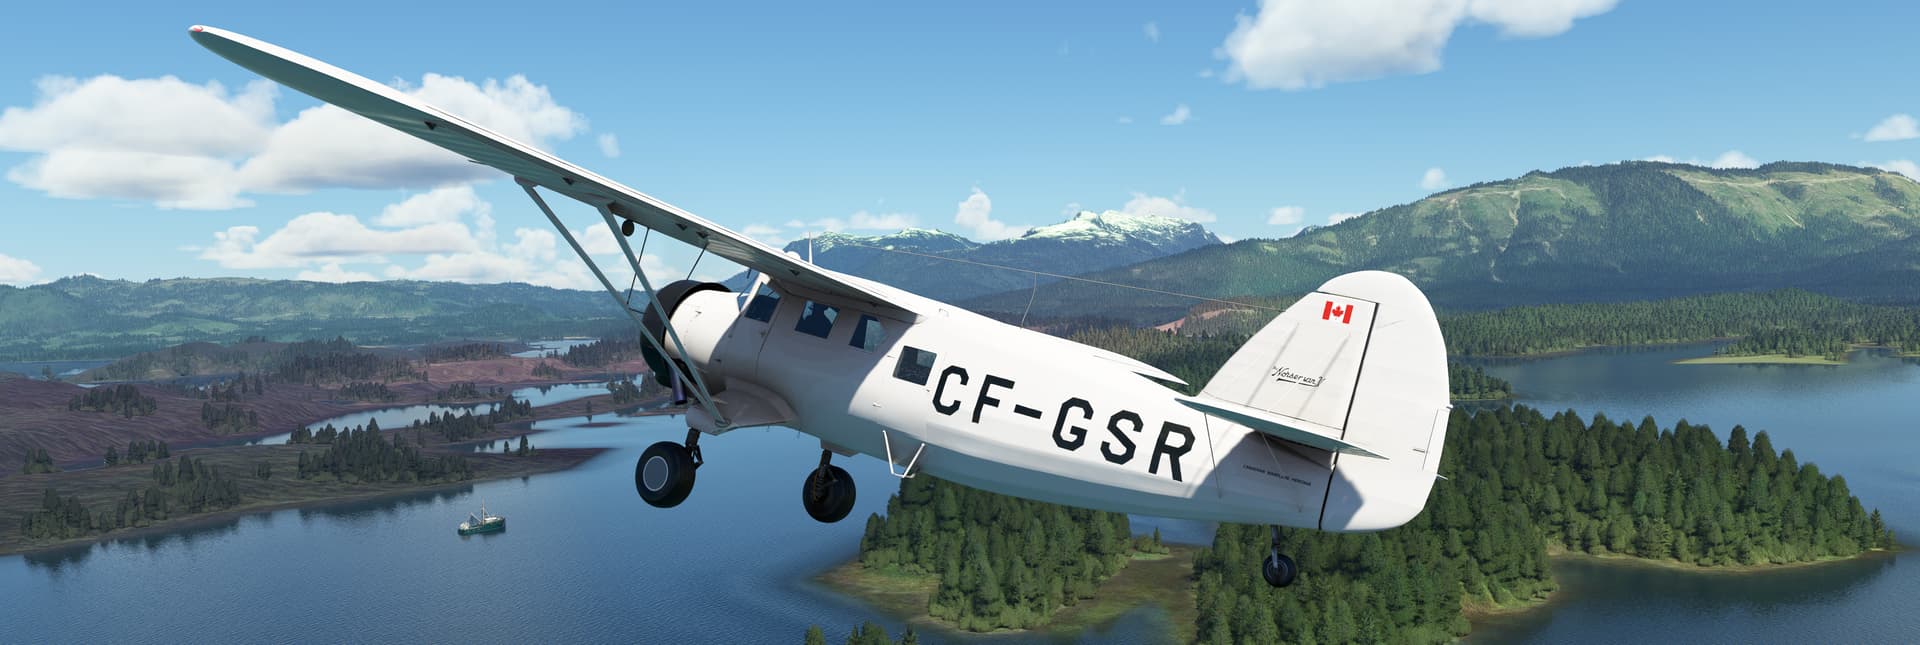 Seasons coming! - MSFS 2024 - Microsoft Flight Simulator Forums